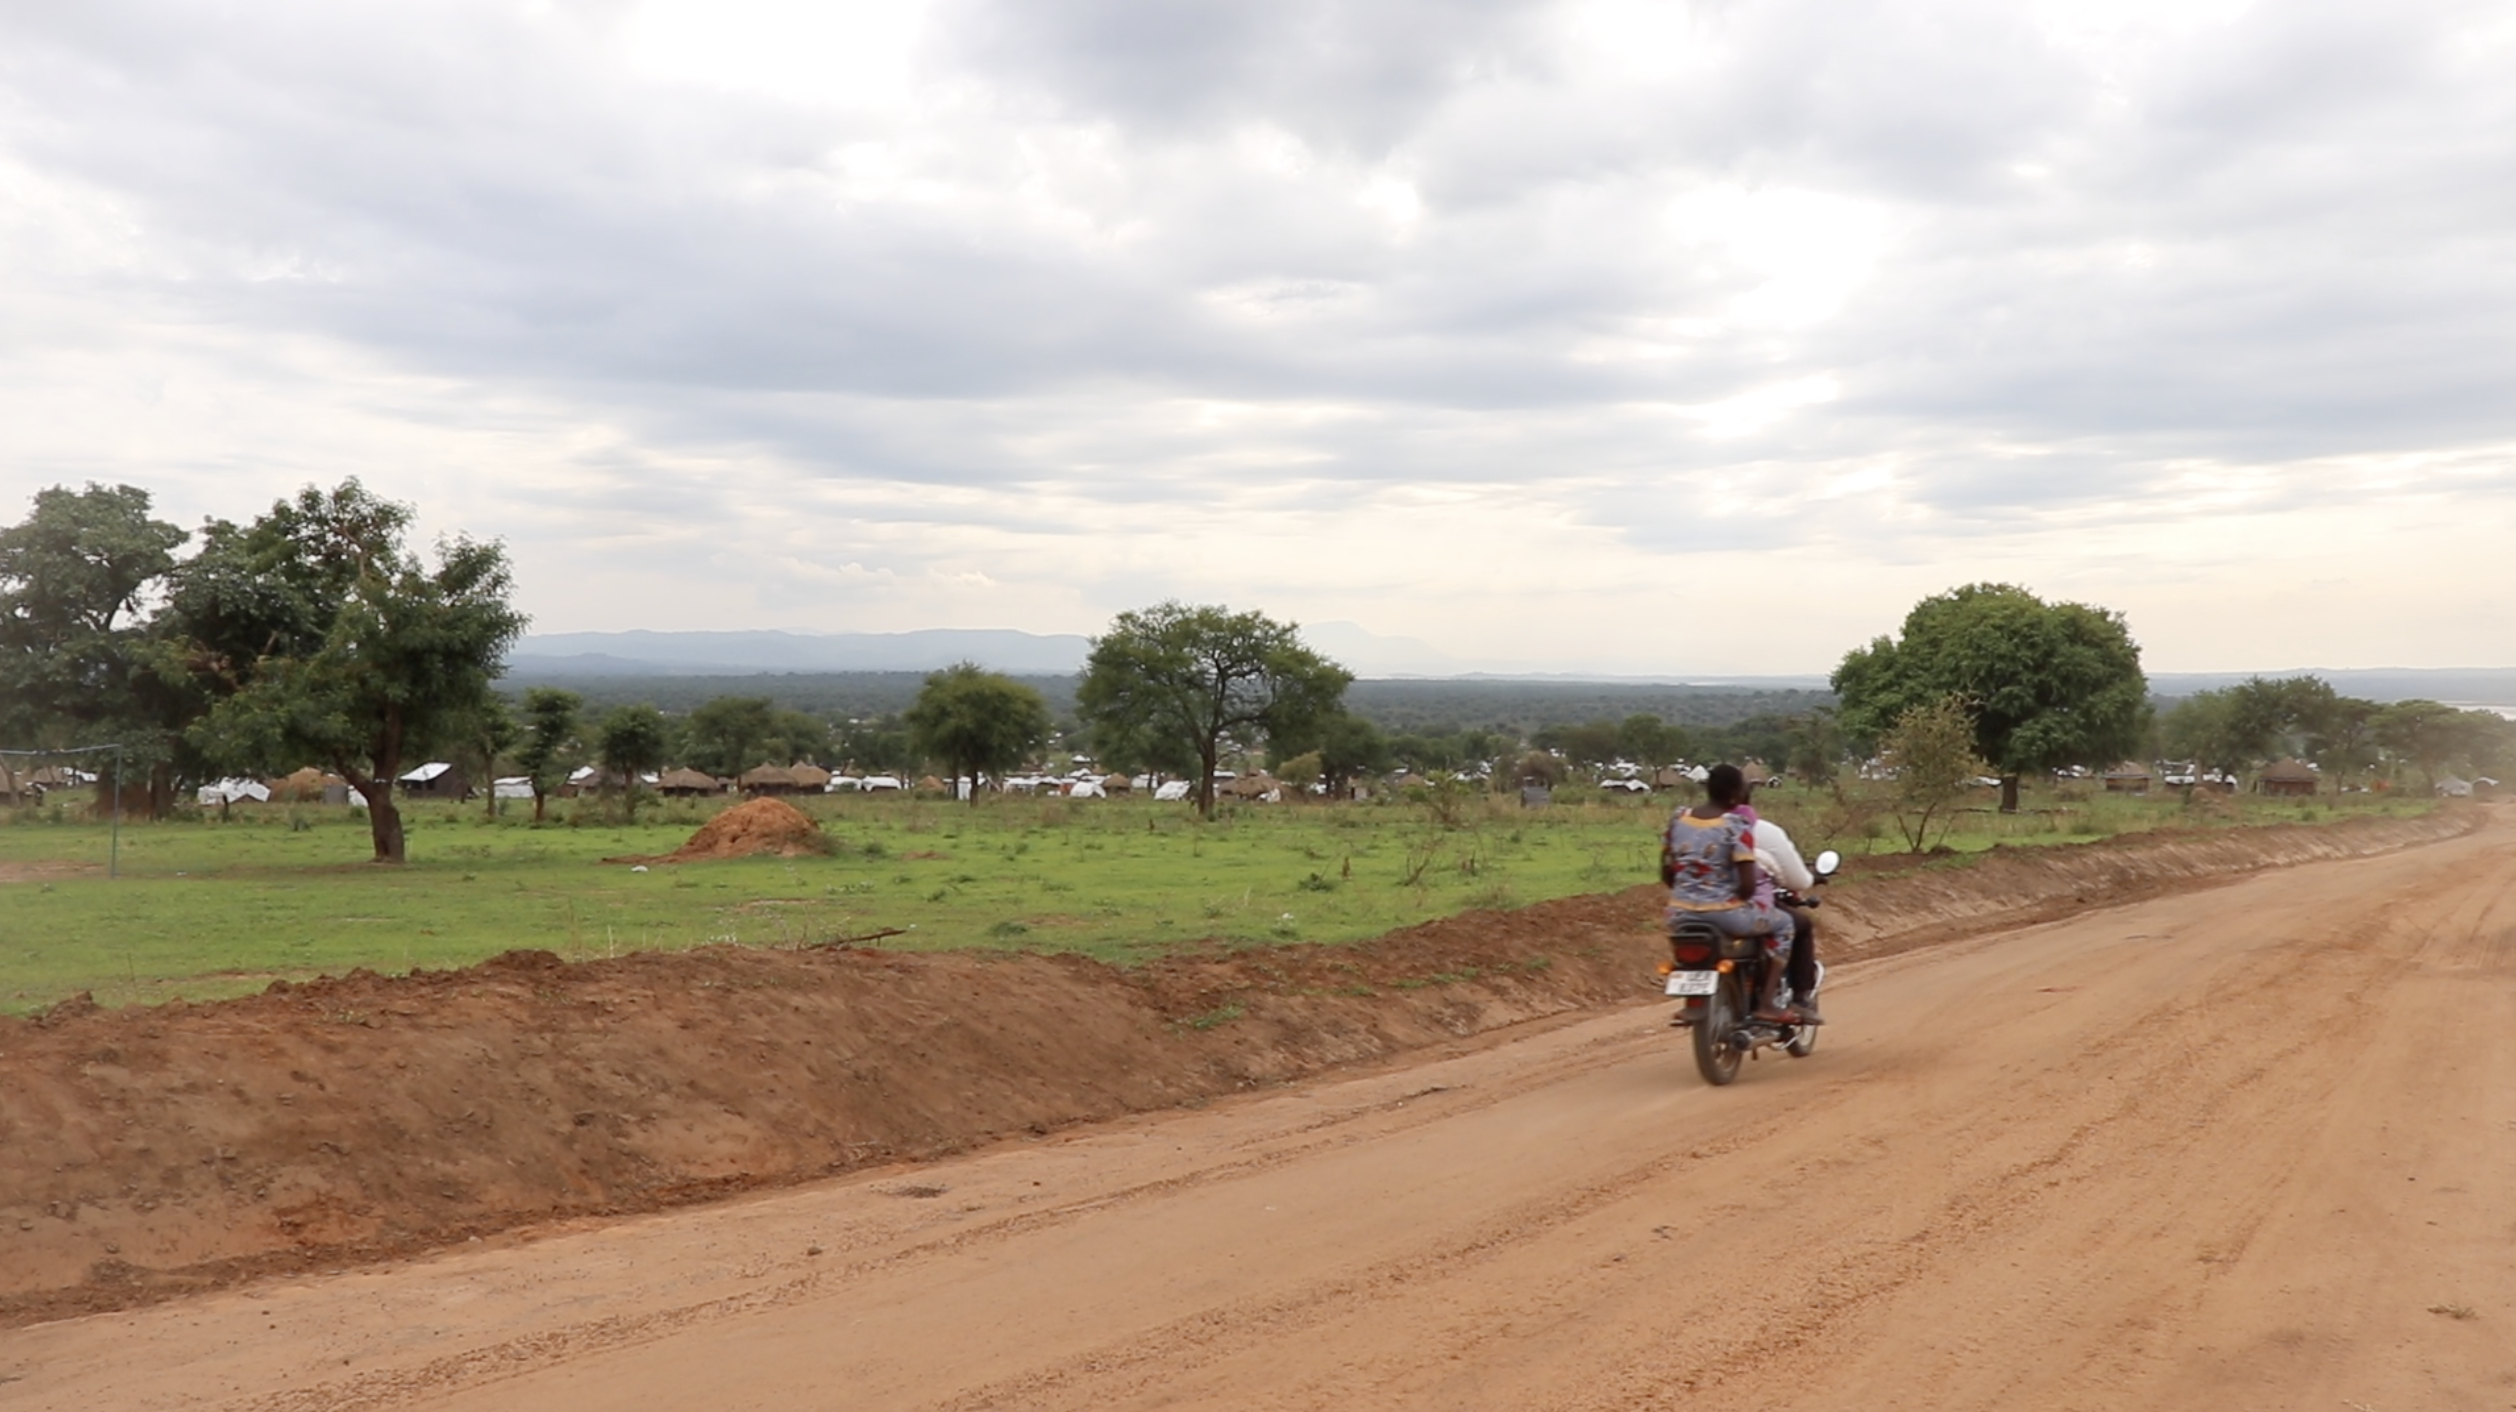 Palorinya refugee settlement in northern Uganda. Image by Carolyn Thompson. Uganda, 2019.